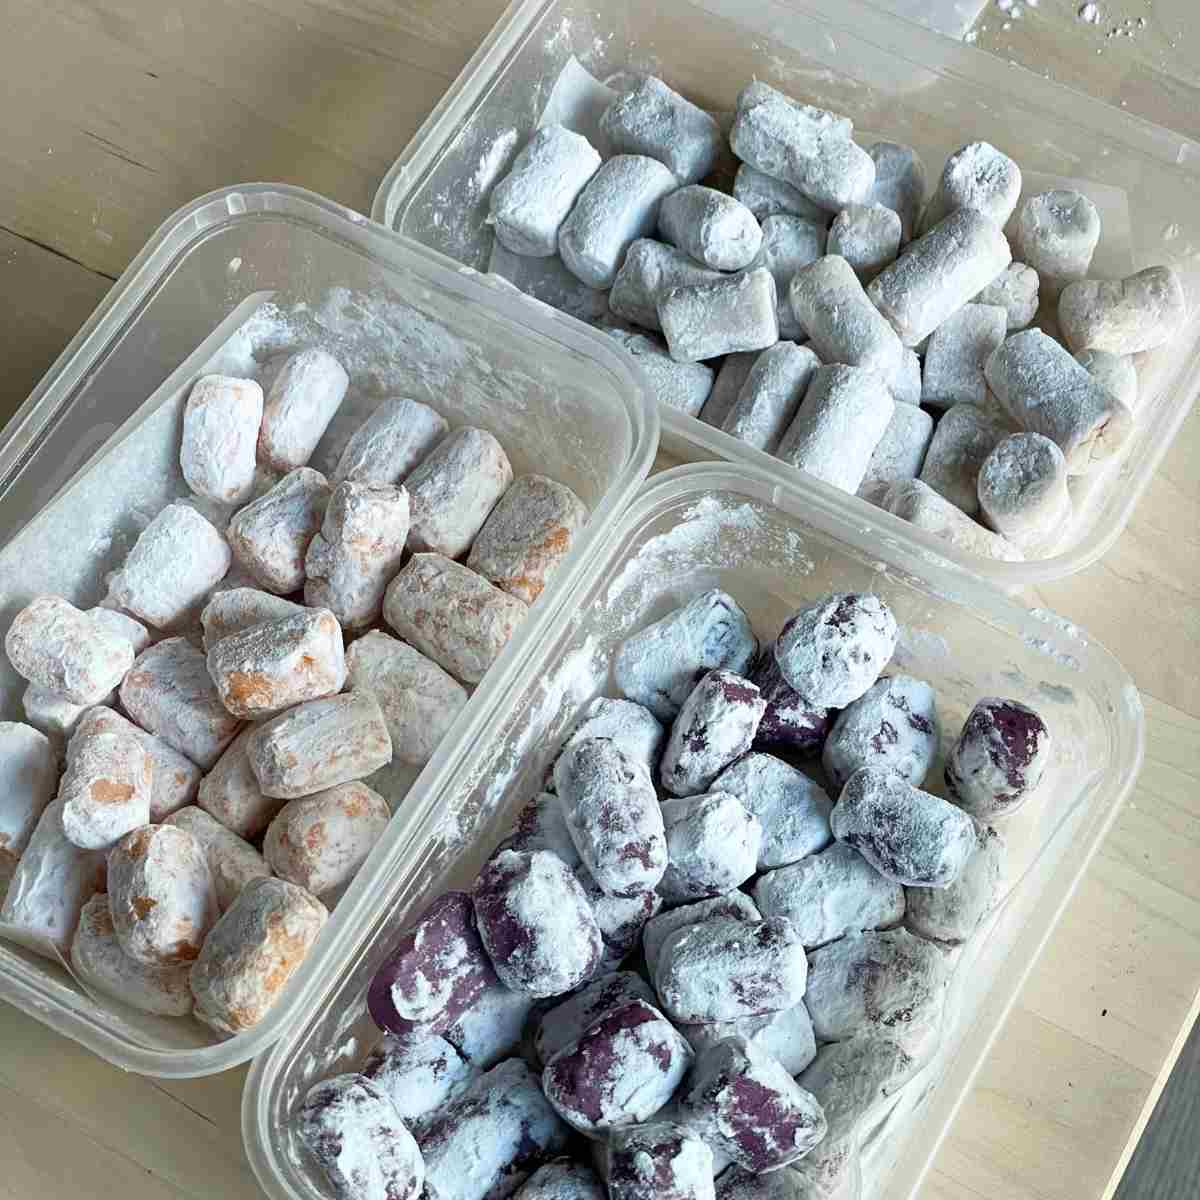 How to store taro sweet potato balls